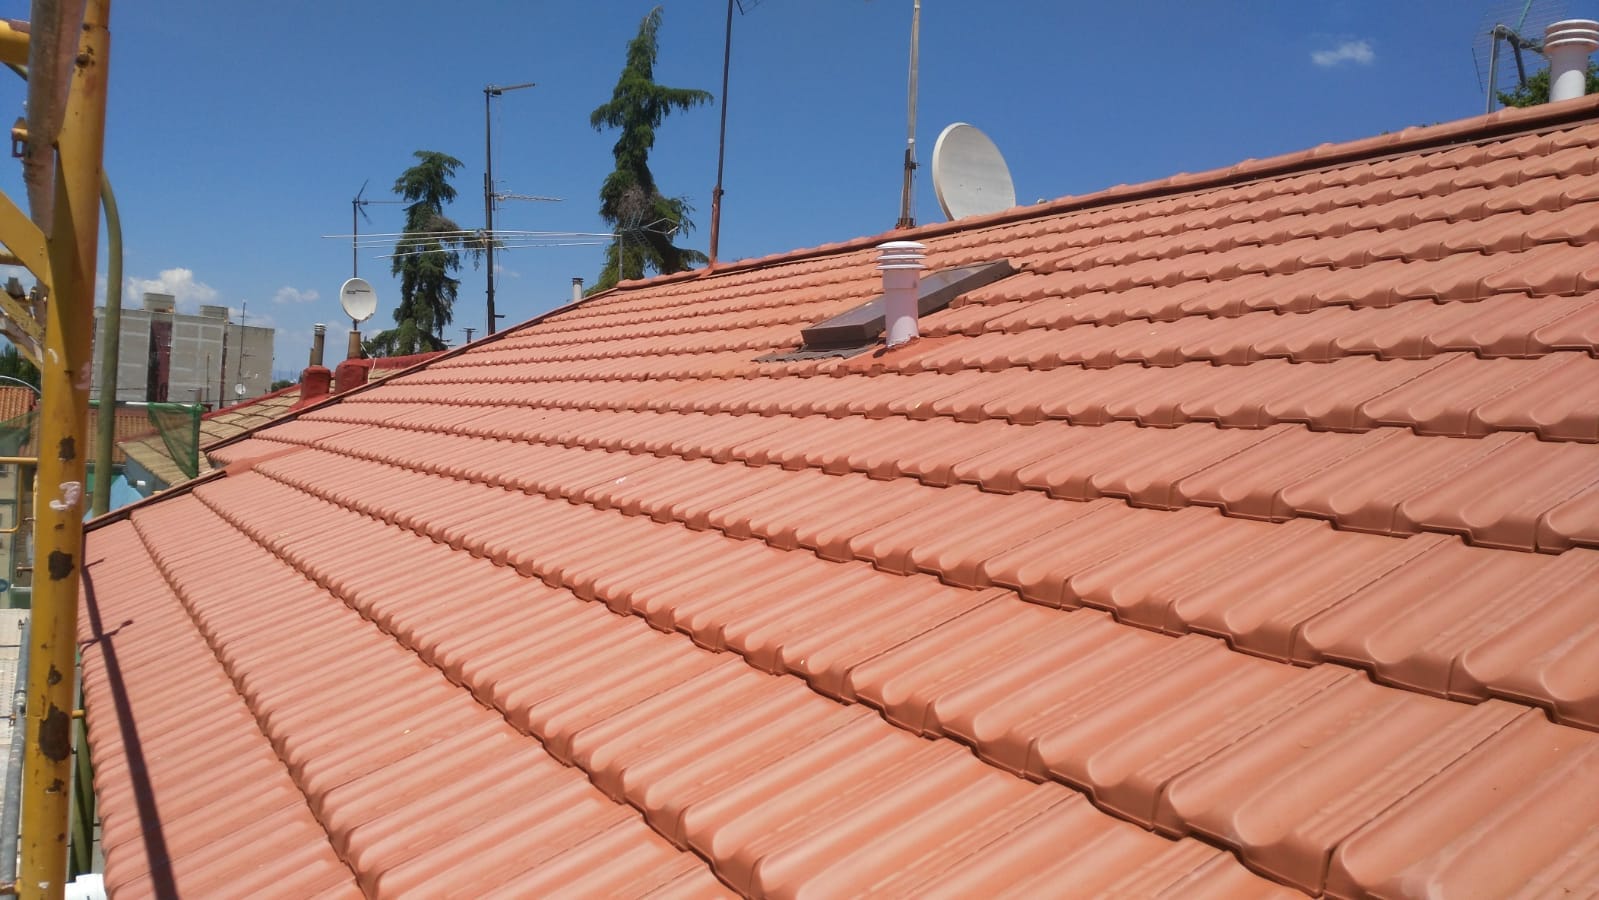 Impermeabilizar tejado teja plana en Madrid